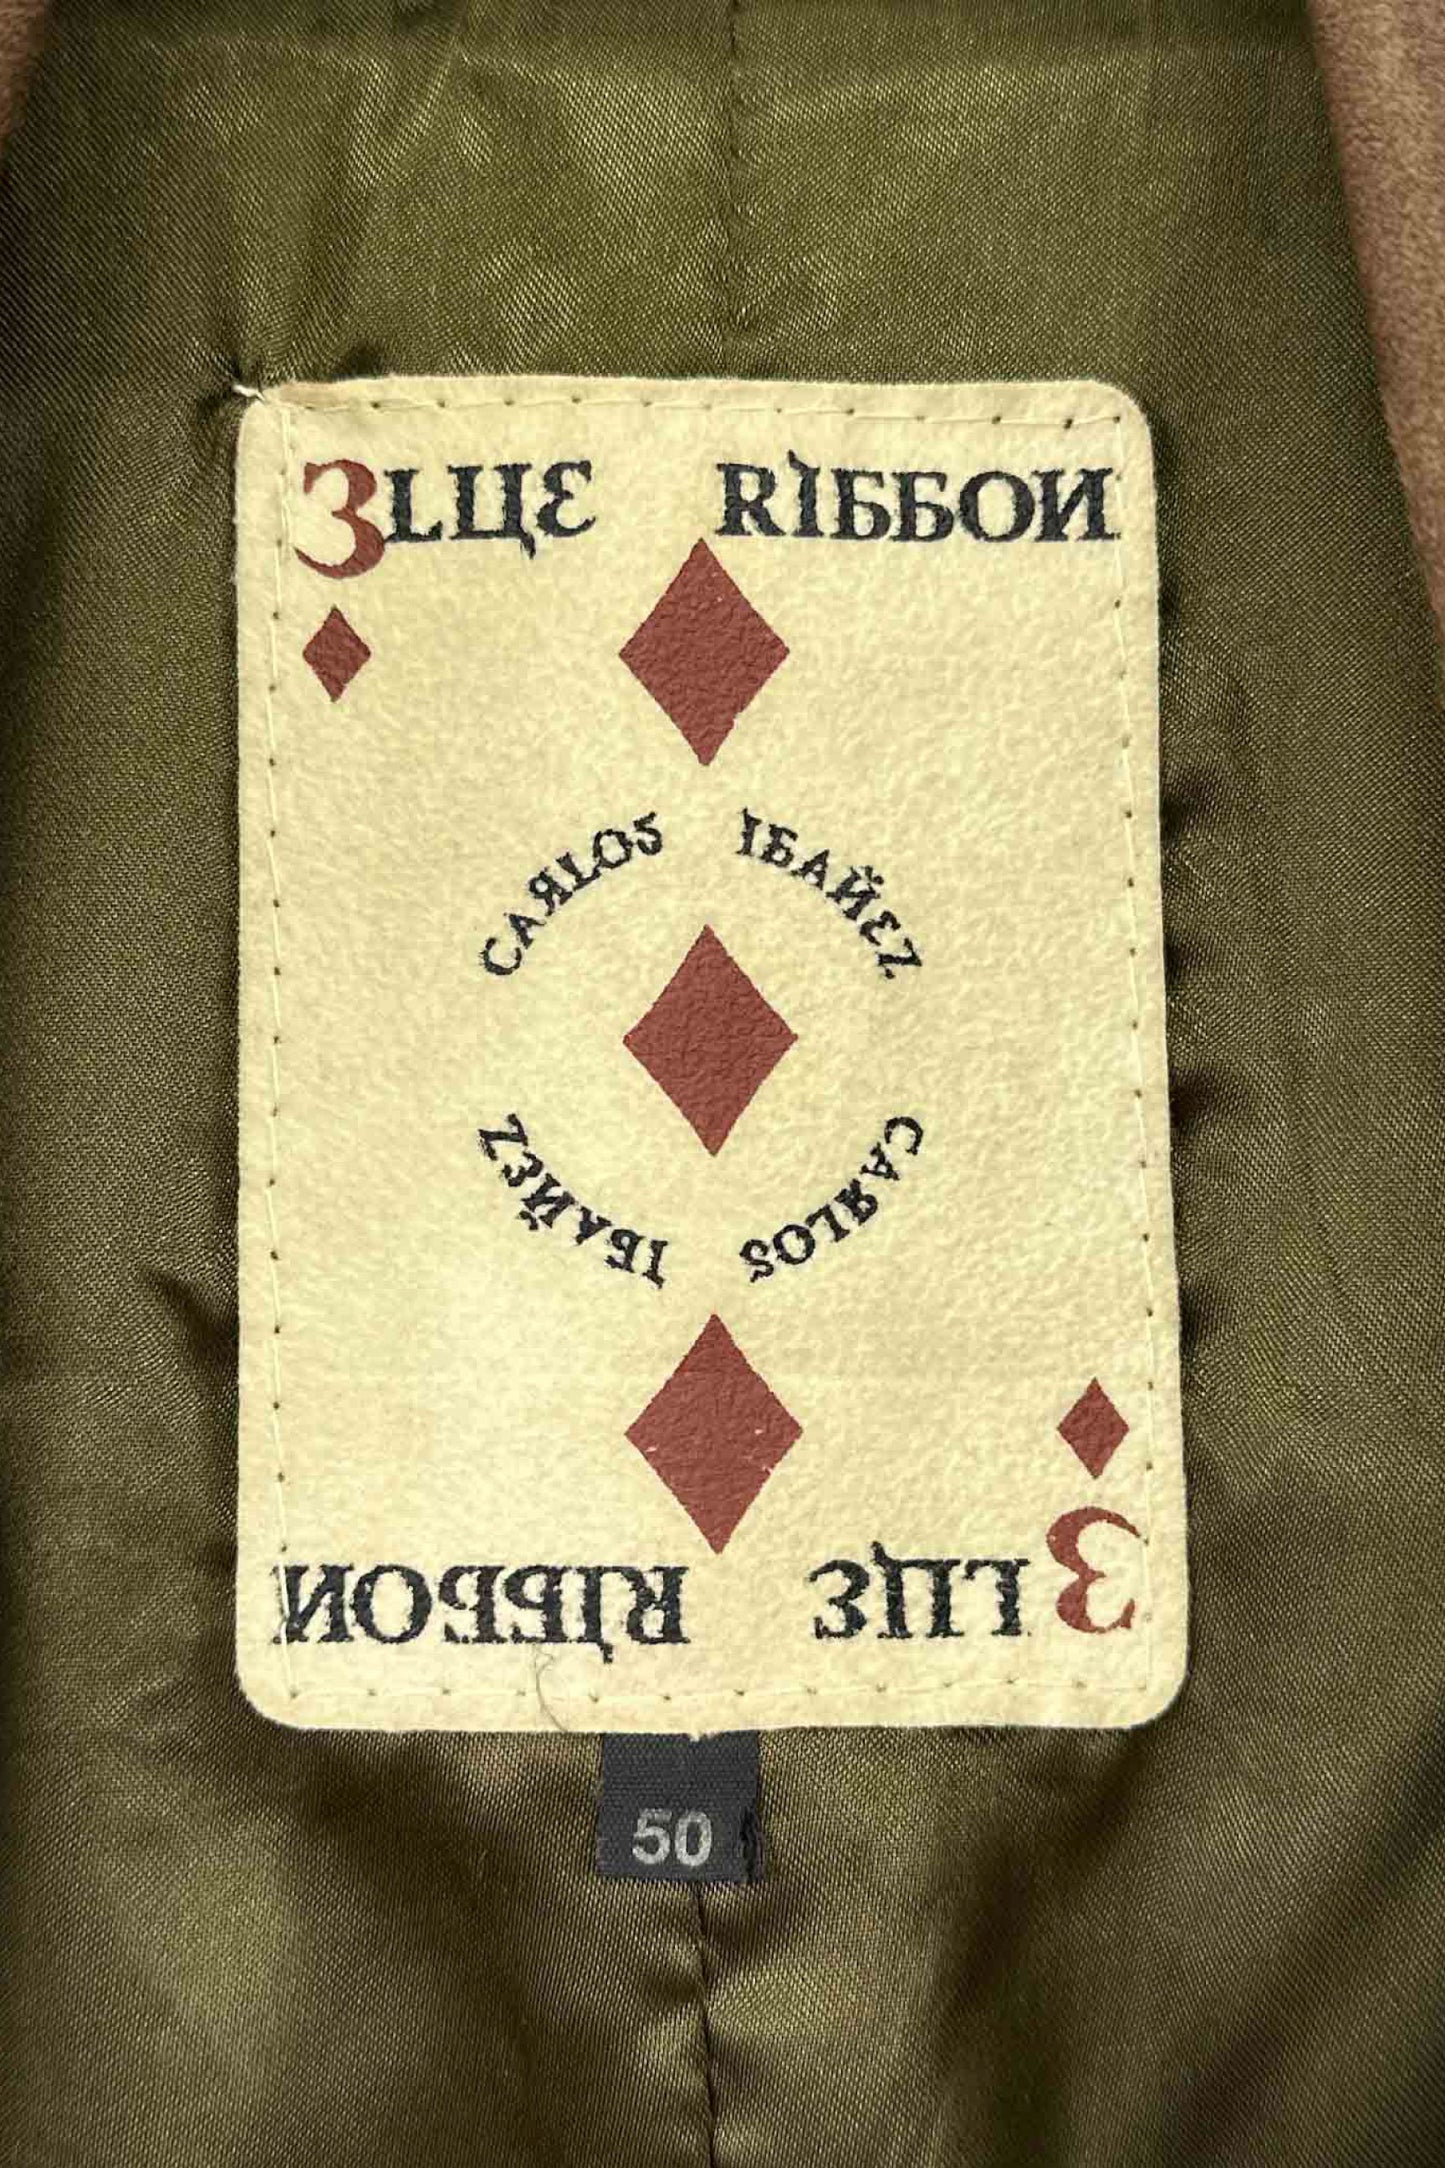 ELLIE RIBBON khaki leather jacketx